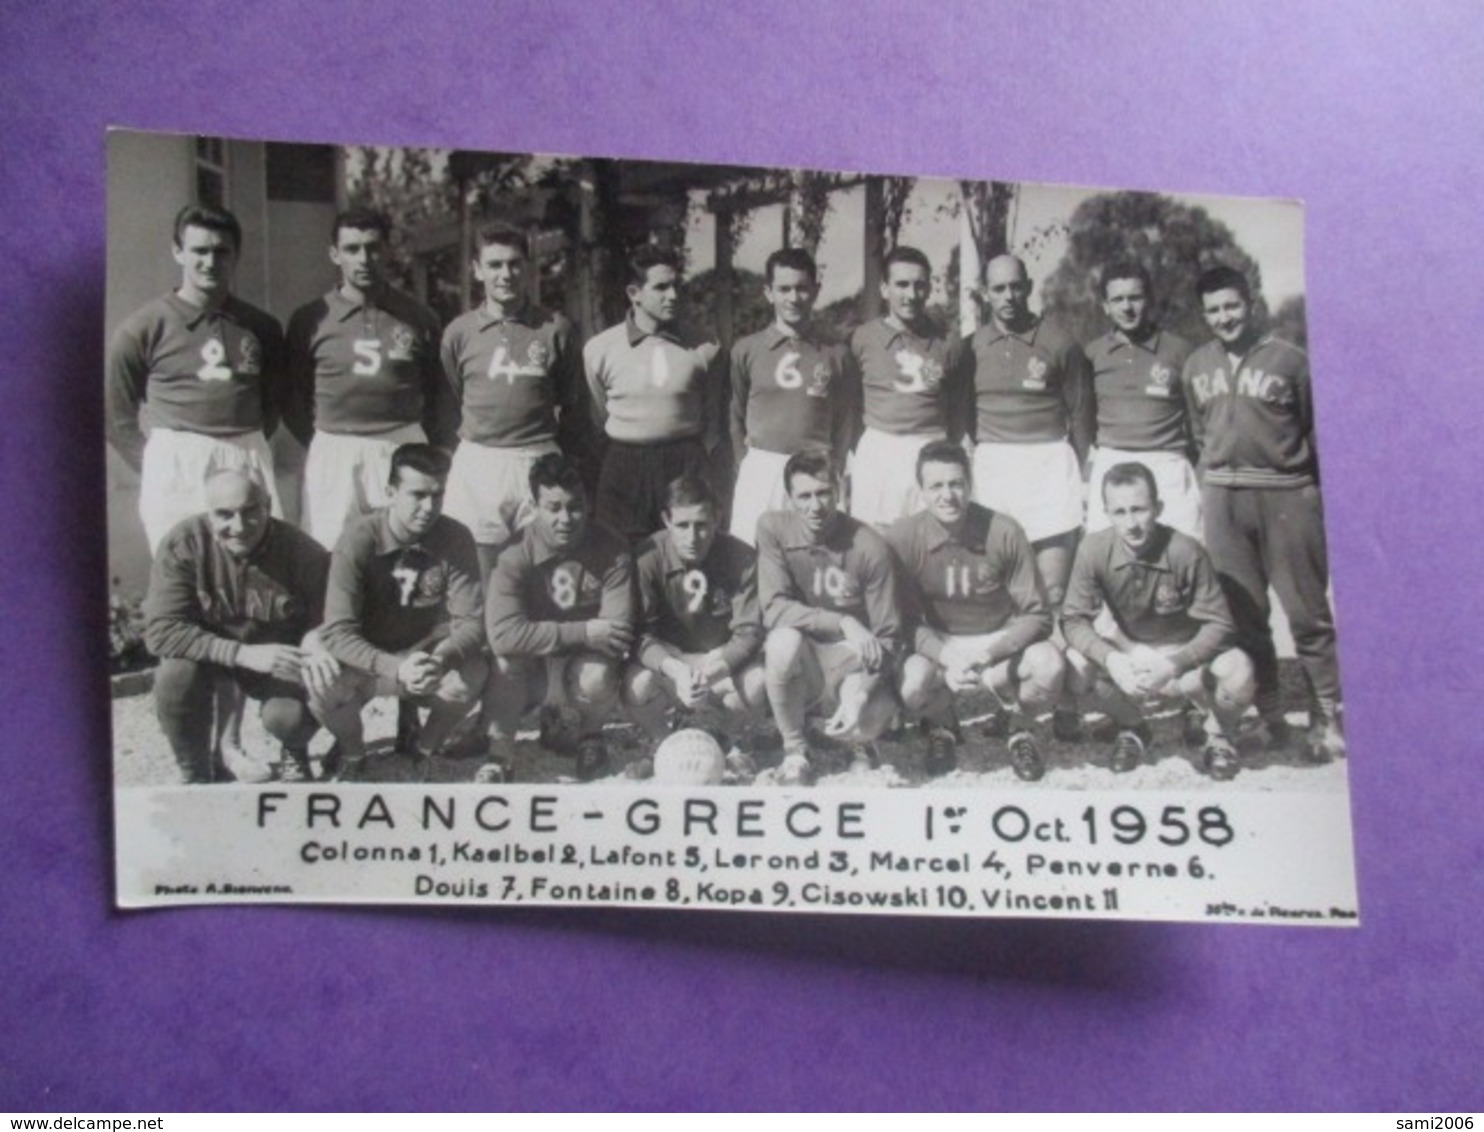 PHOTO EQUIPE DE FOOT FOOTBALLEURS FRANCE GRECE 1 ER OCTOBRE 1958 - Sports